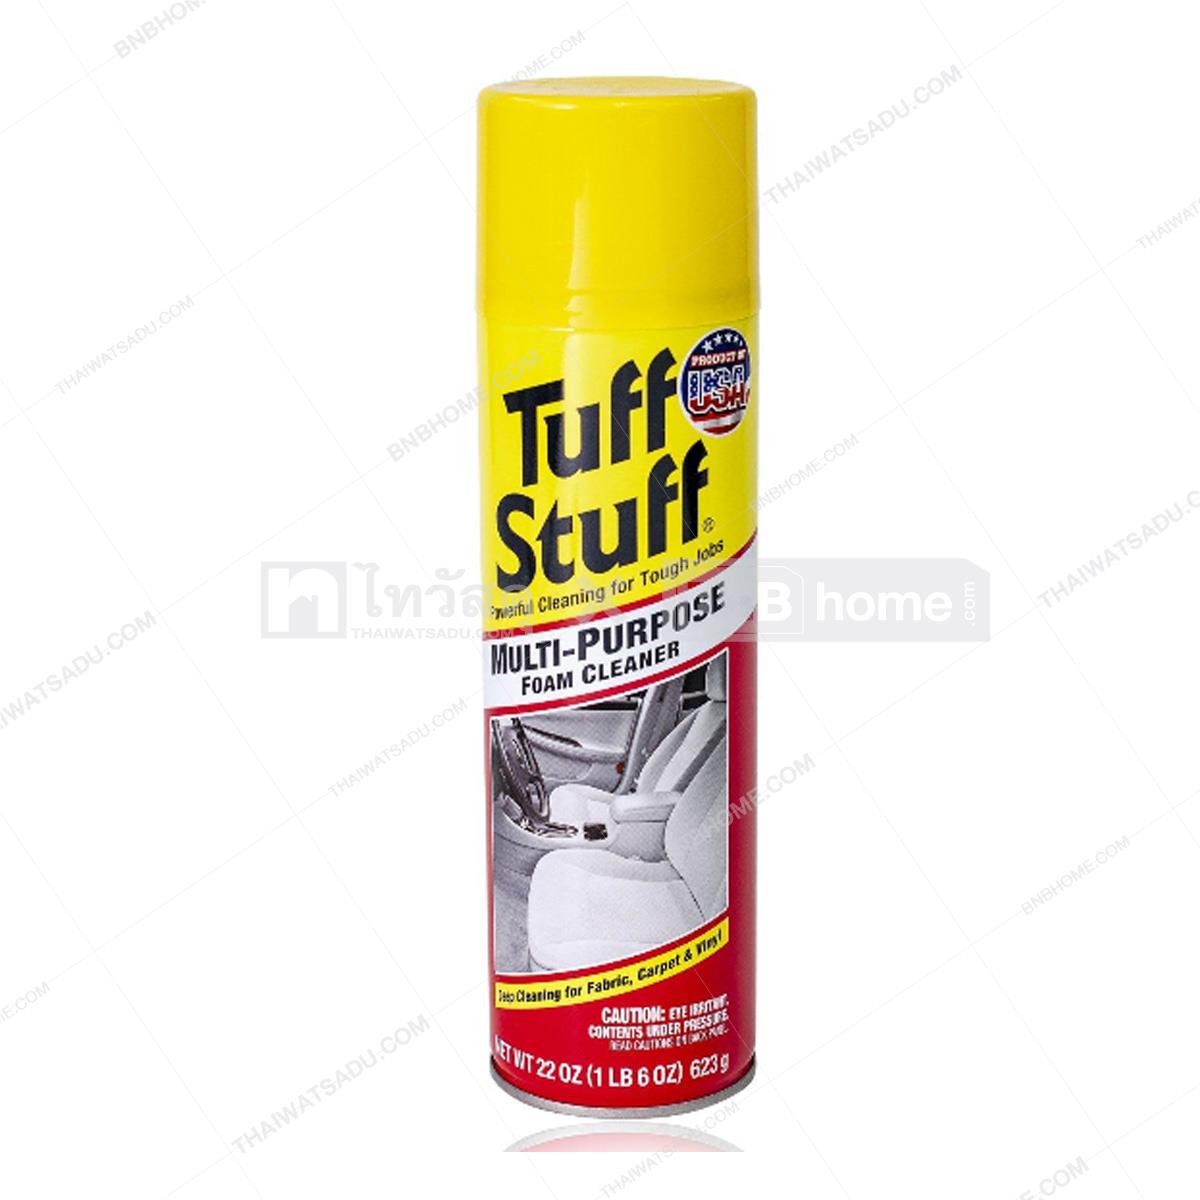 Tuff Stuff Multi-Purpose Foam Cleaner STP (81500/TT12), Size 650 ML. - THAI  WATSADU